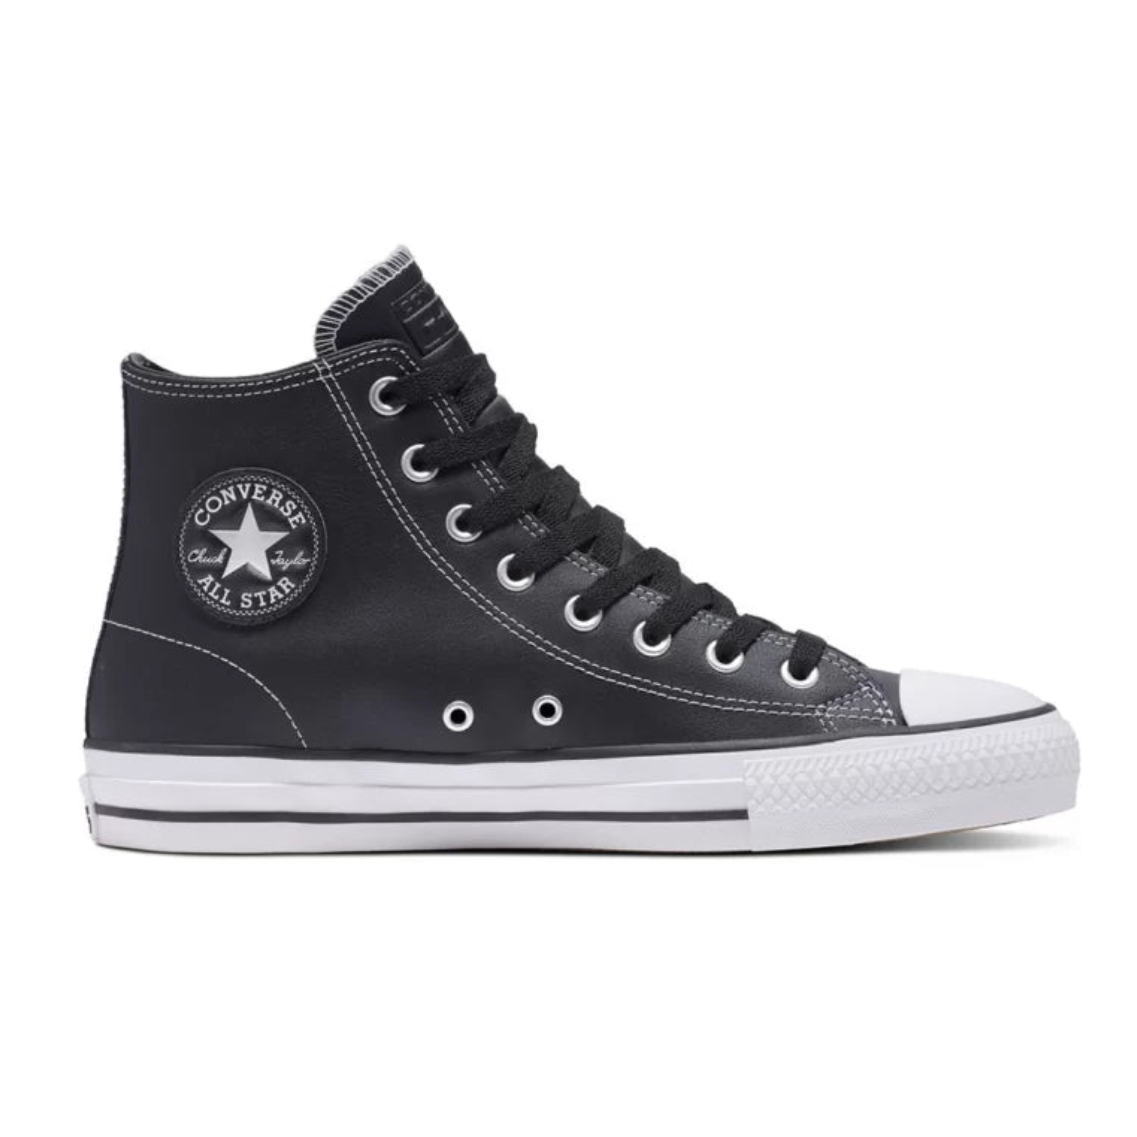 Converse CTAS Pro Hi Leather - Black / White